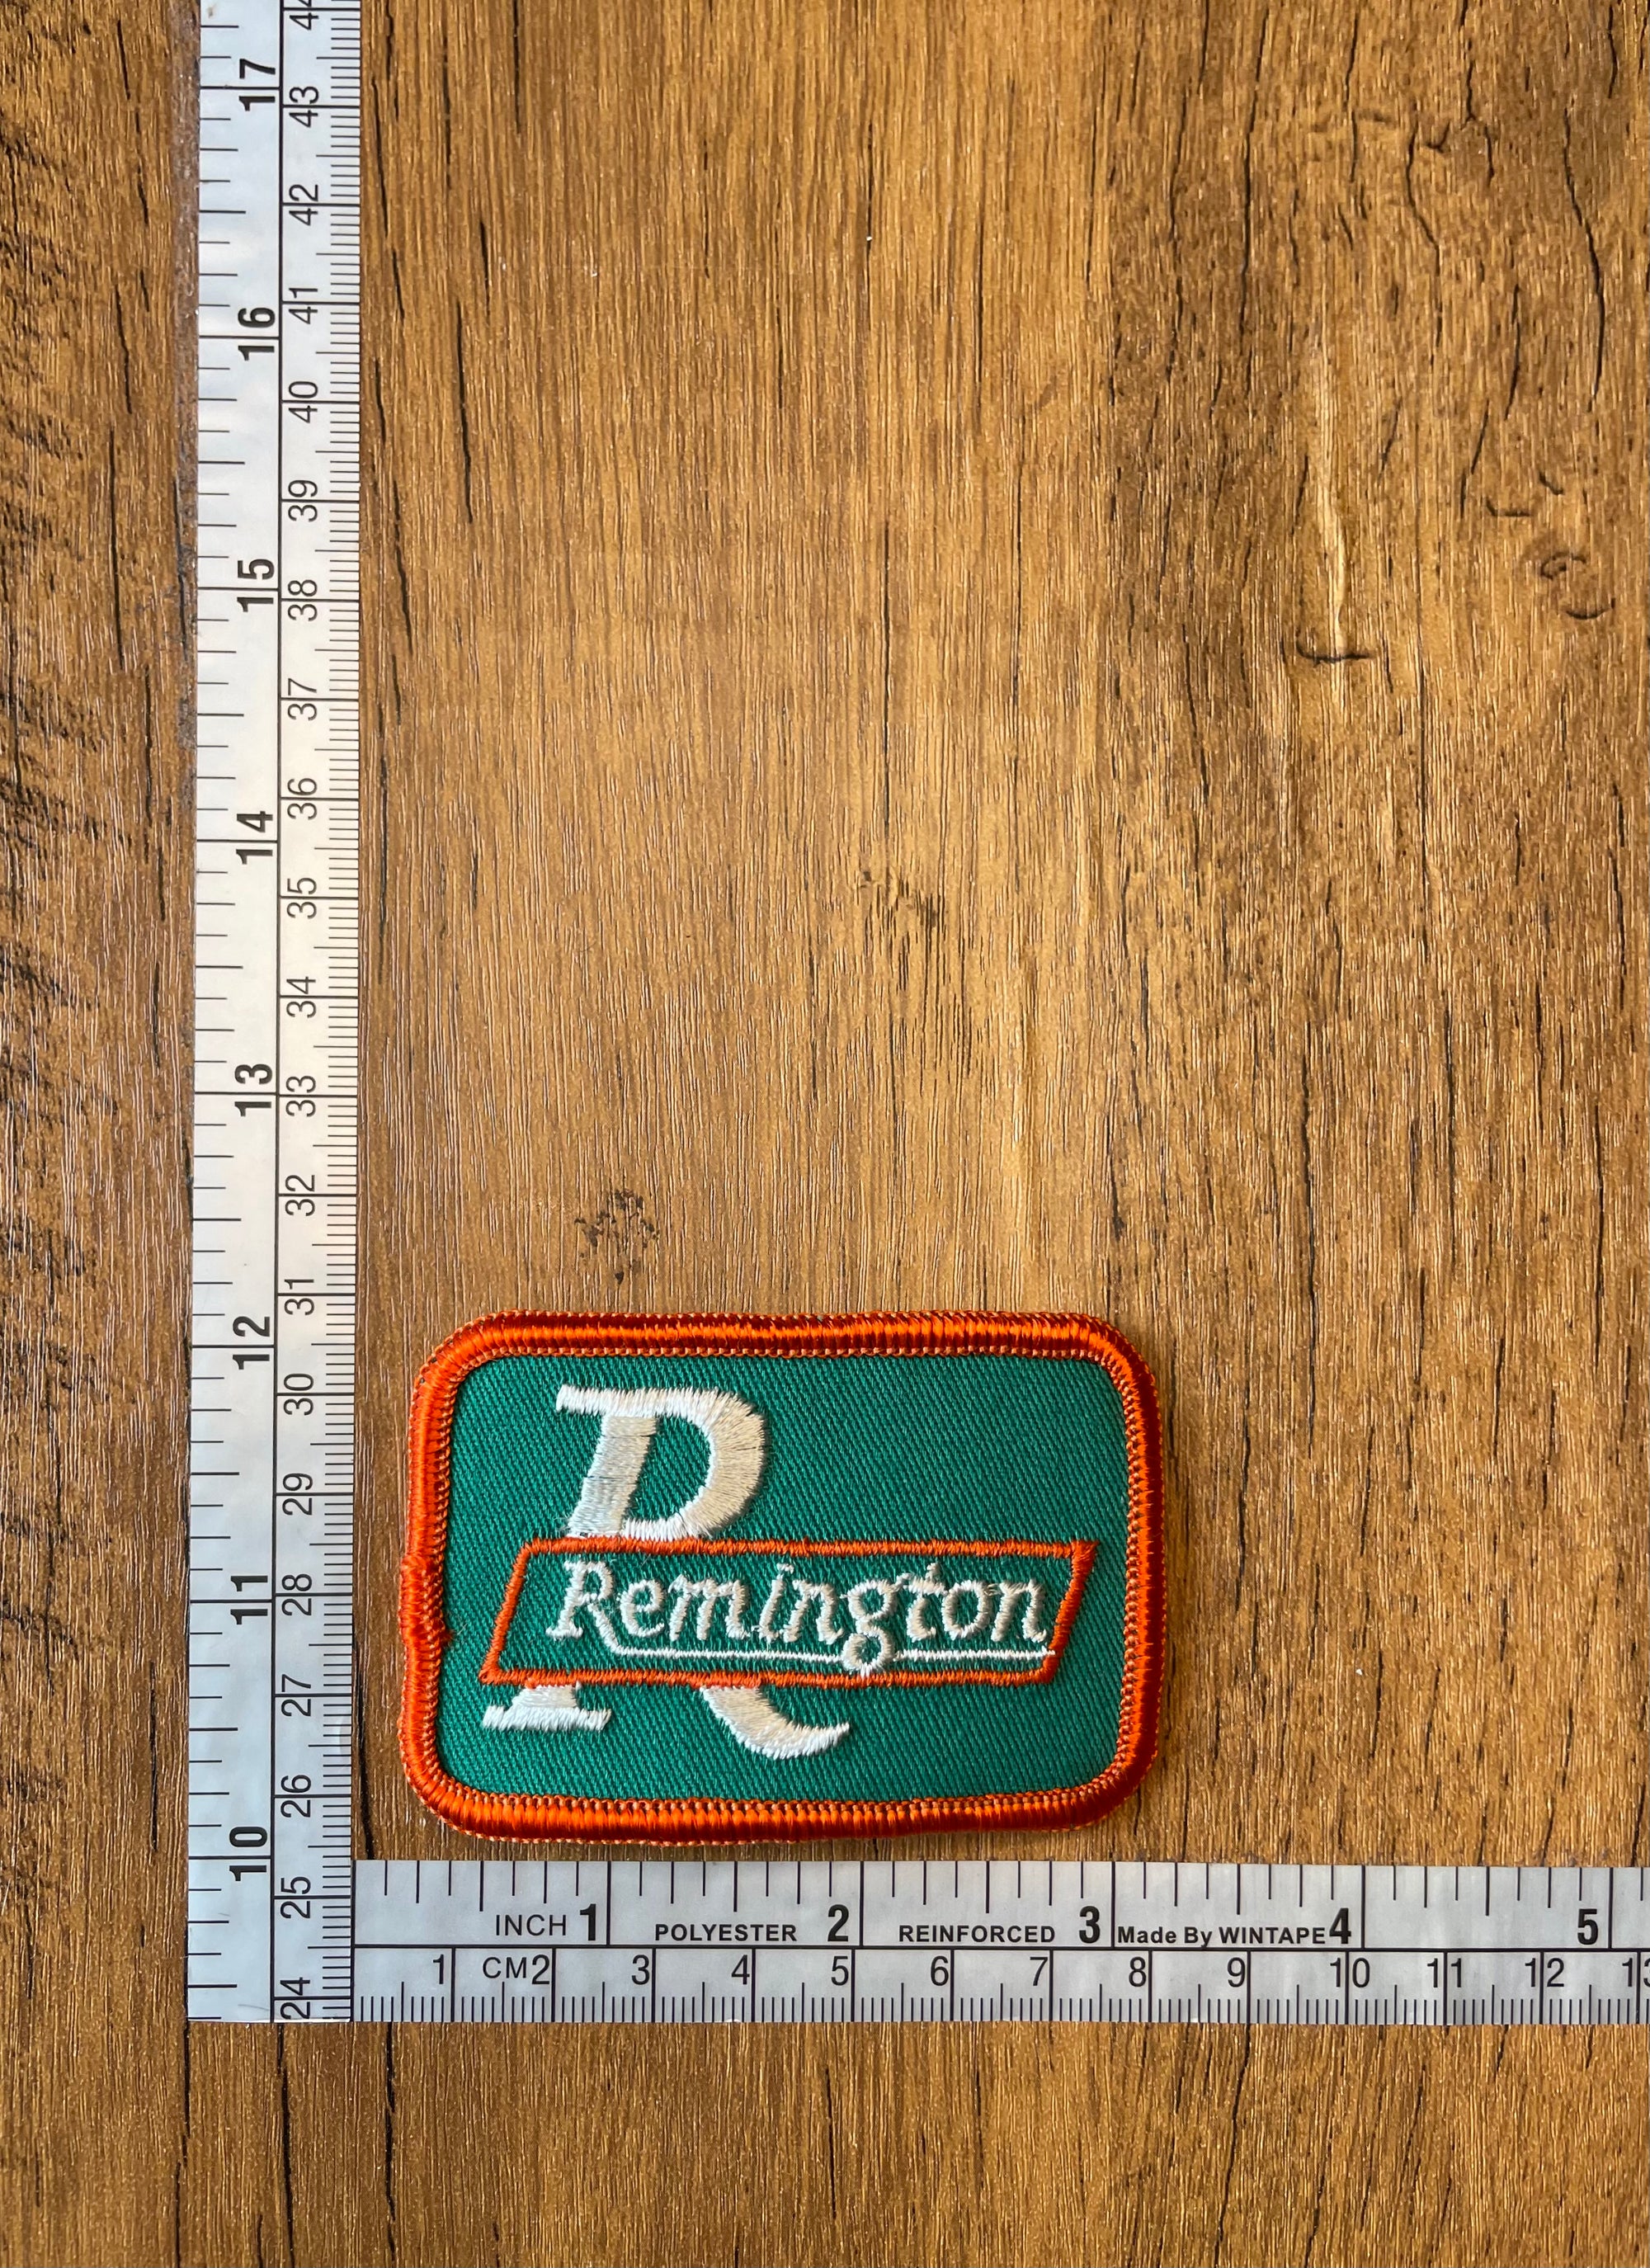 Vintage Remington